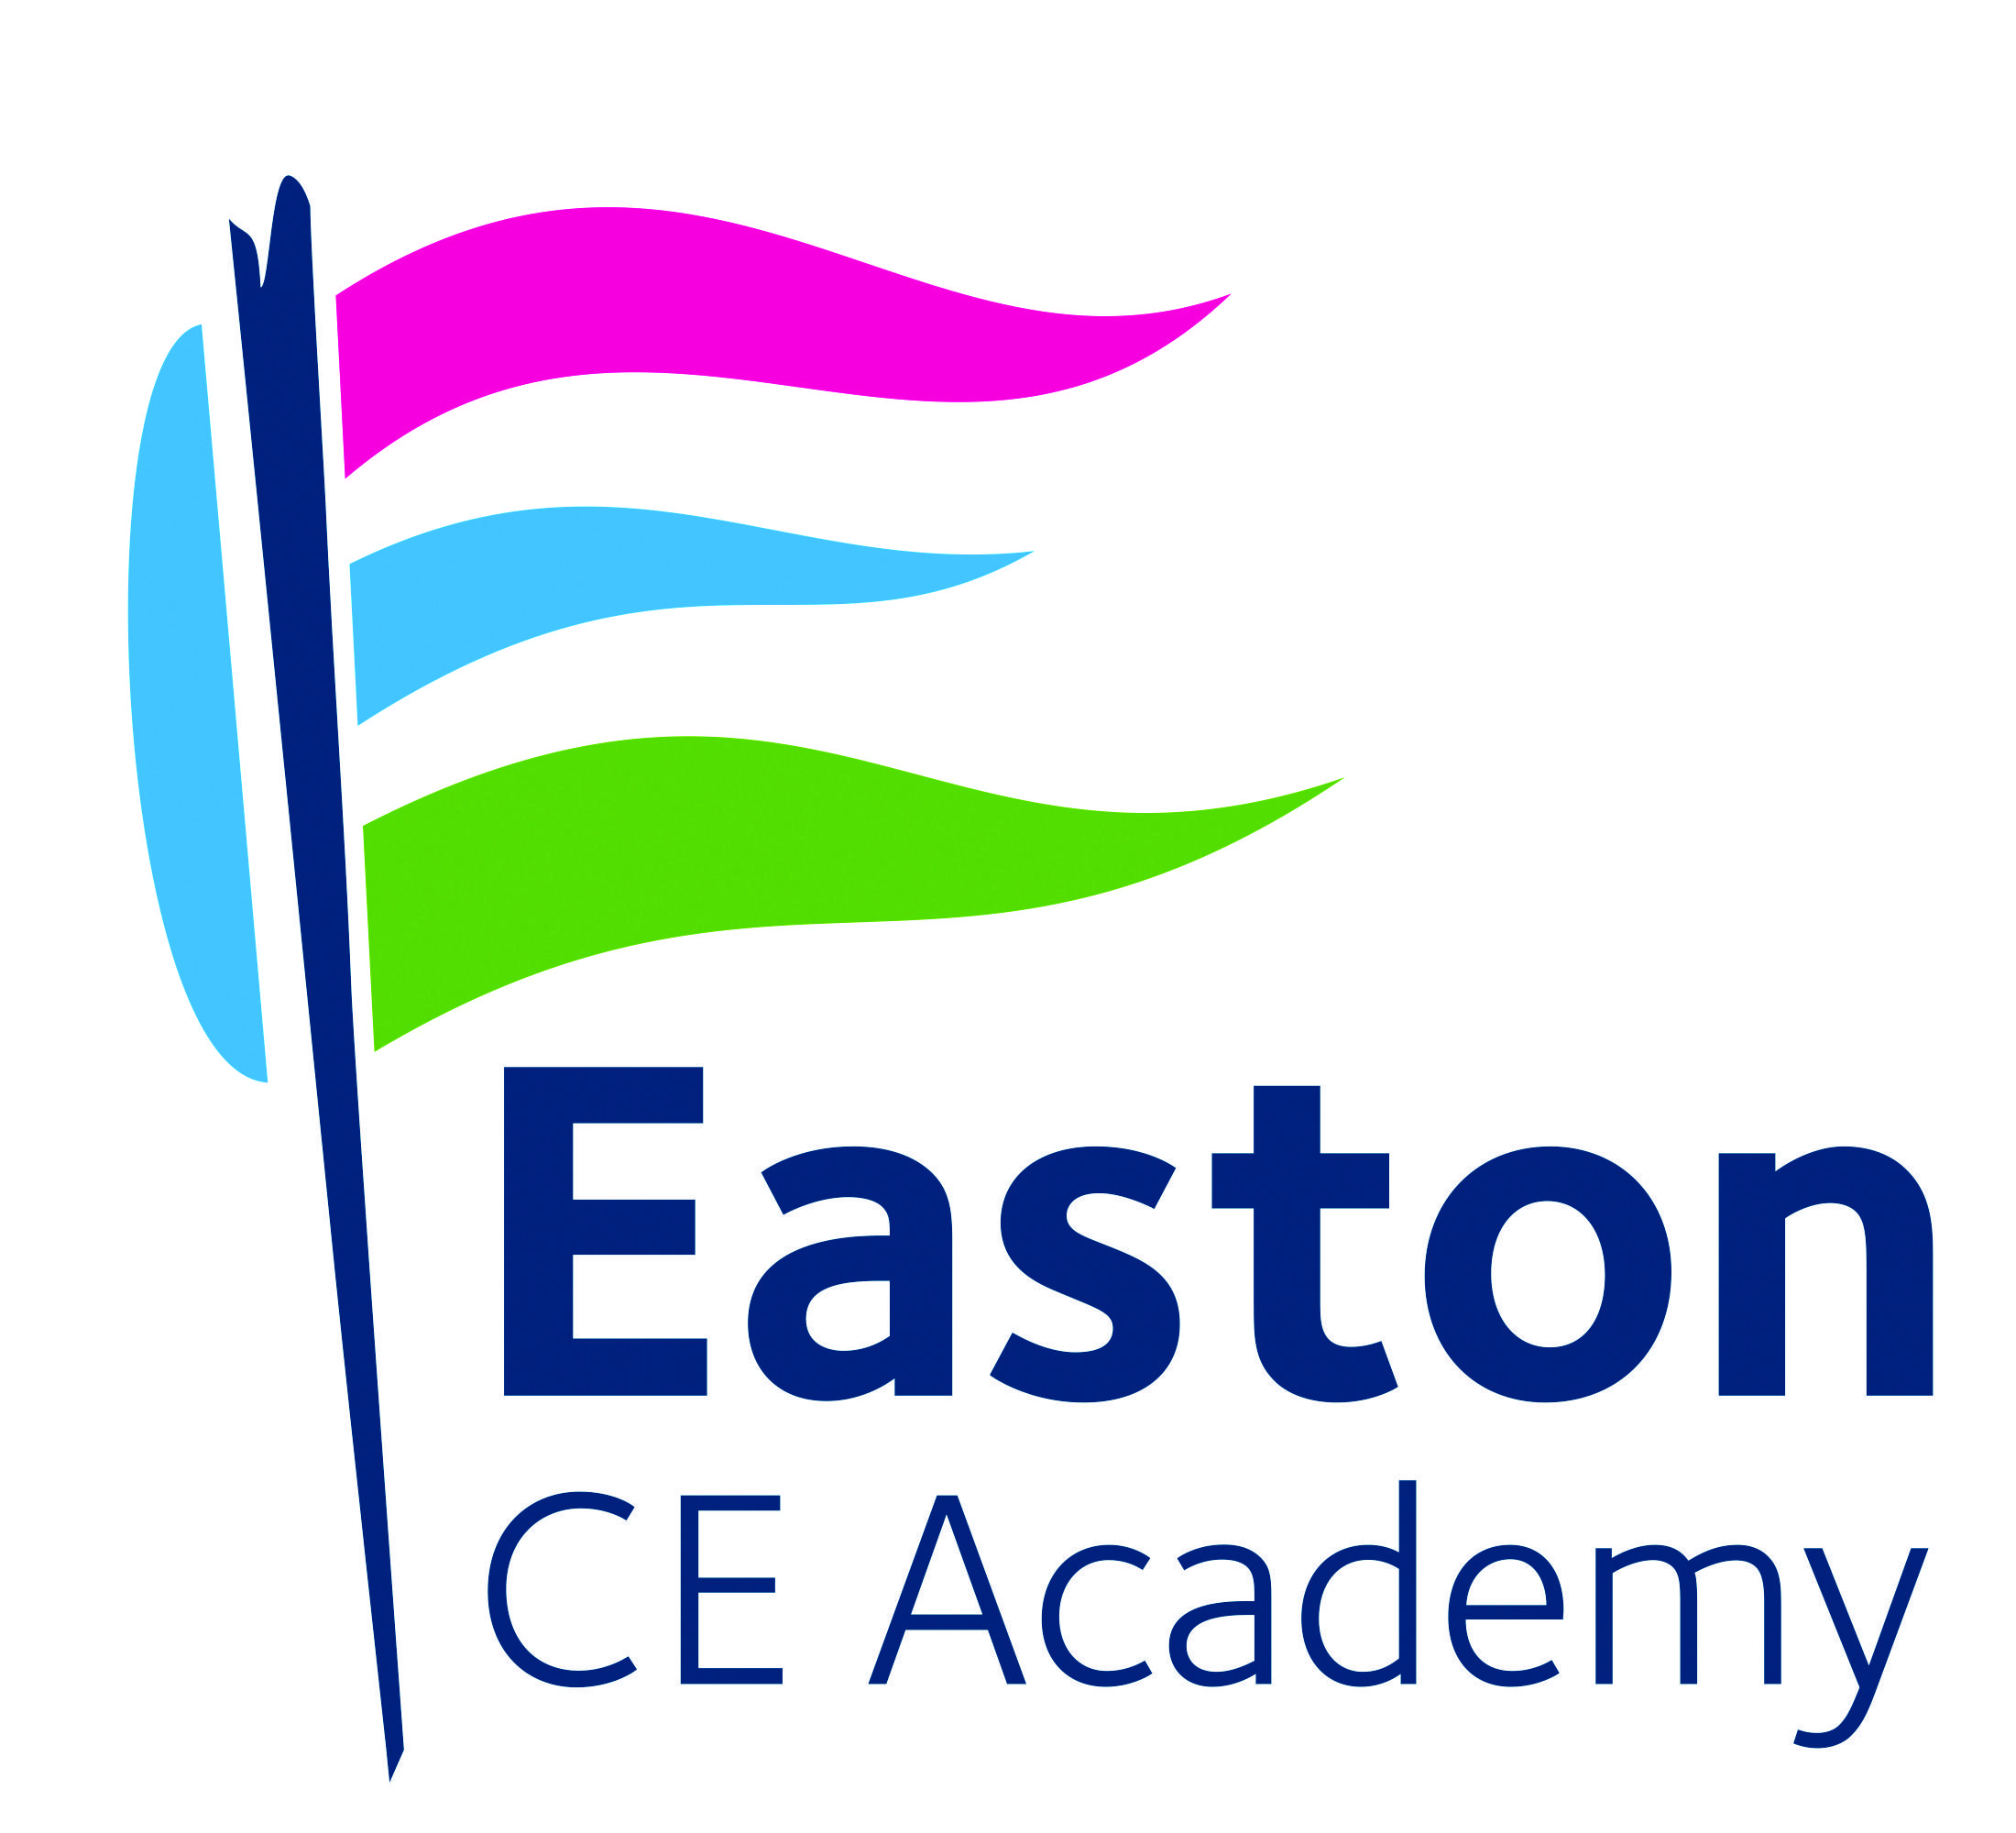 New Easton Logo - Easton CE Academy education in Easton